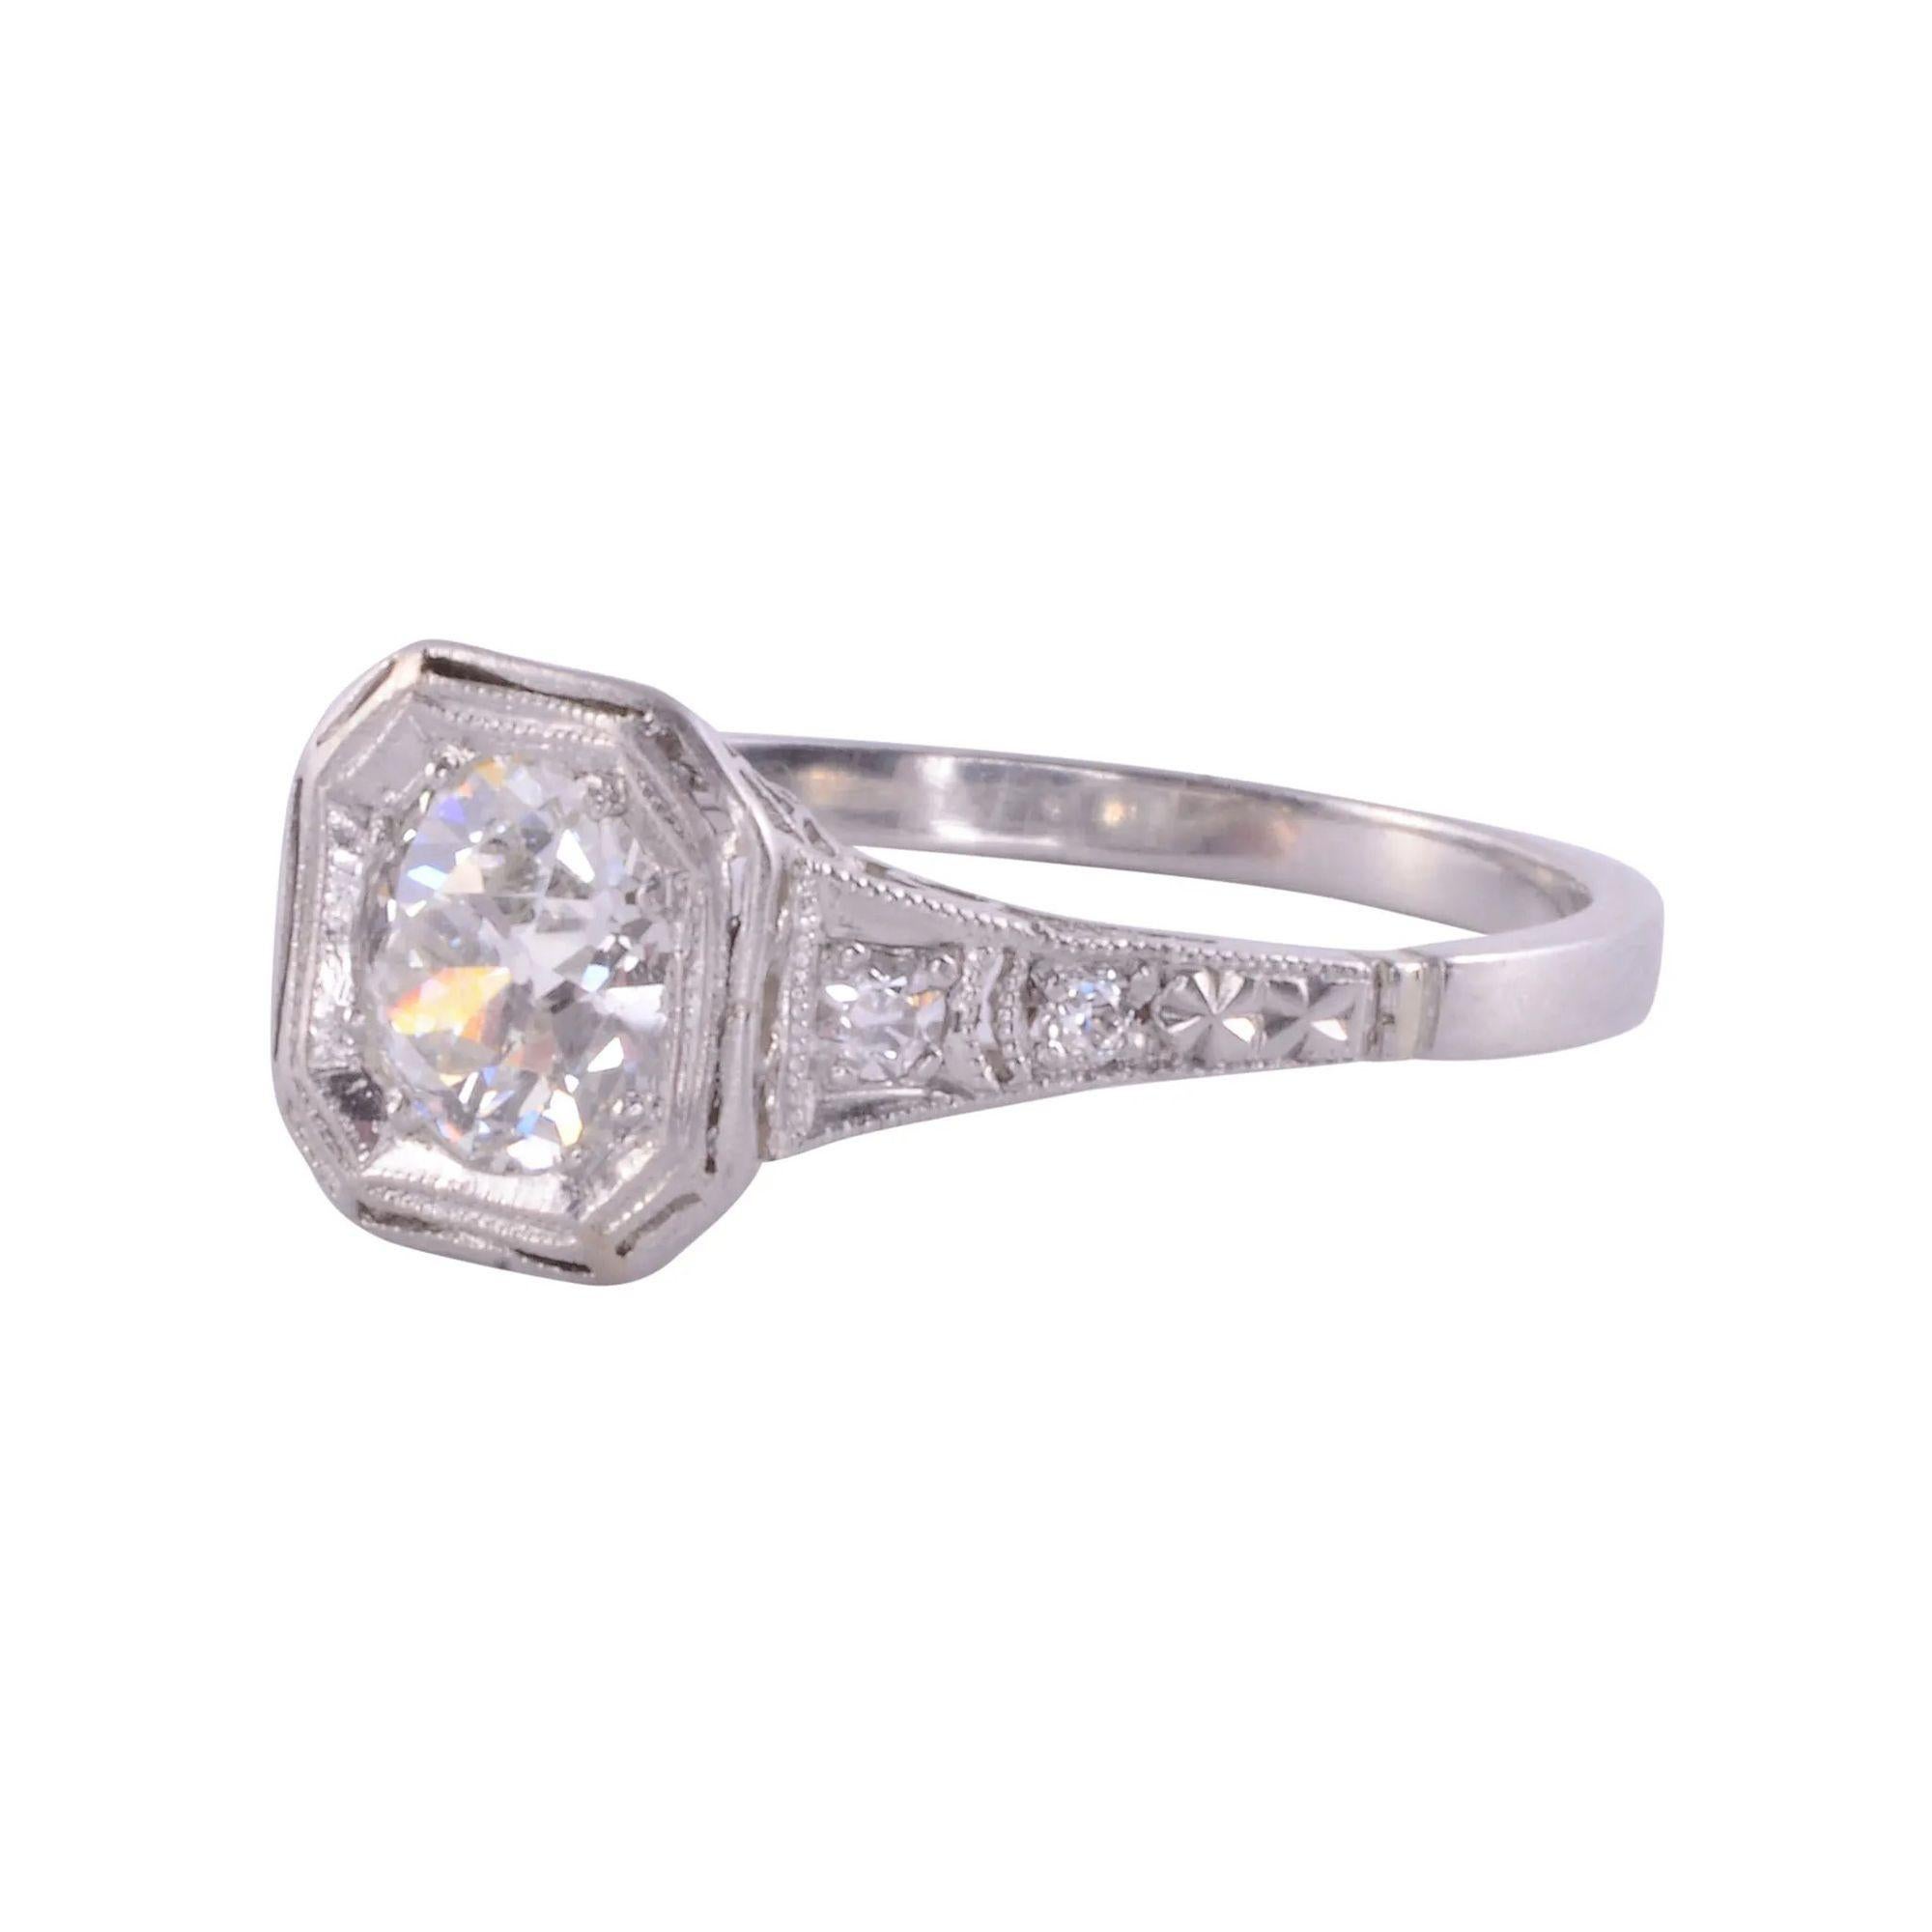 Antique Art Deco diamond platinum engagement ring, circa 1920. This platinum Art Deco engagement ring features a .67 carat old European cut center diamond. The diamond has VS2 clarity and K color. There are four old European cut accent diamonds at